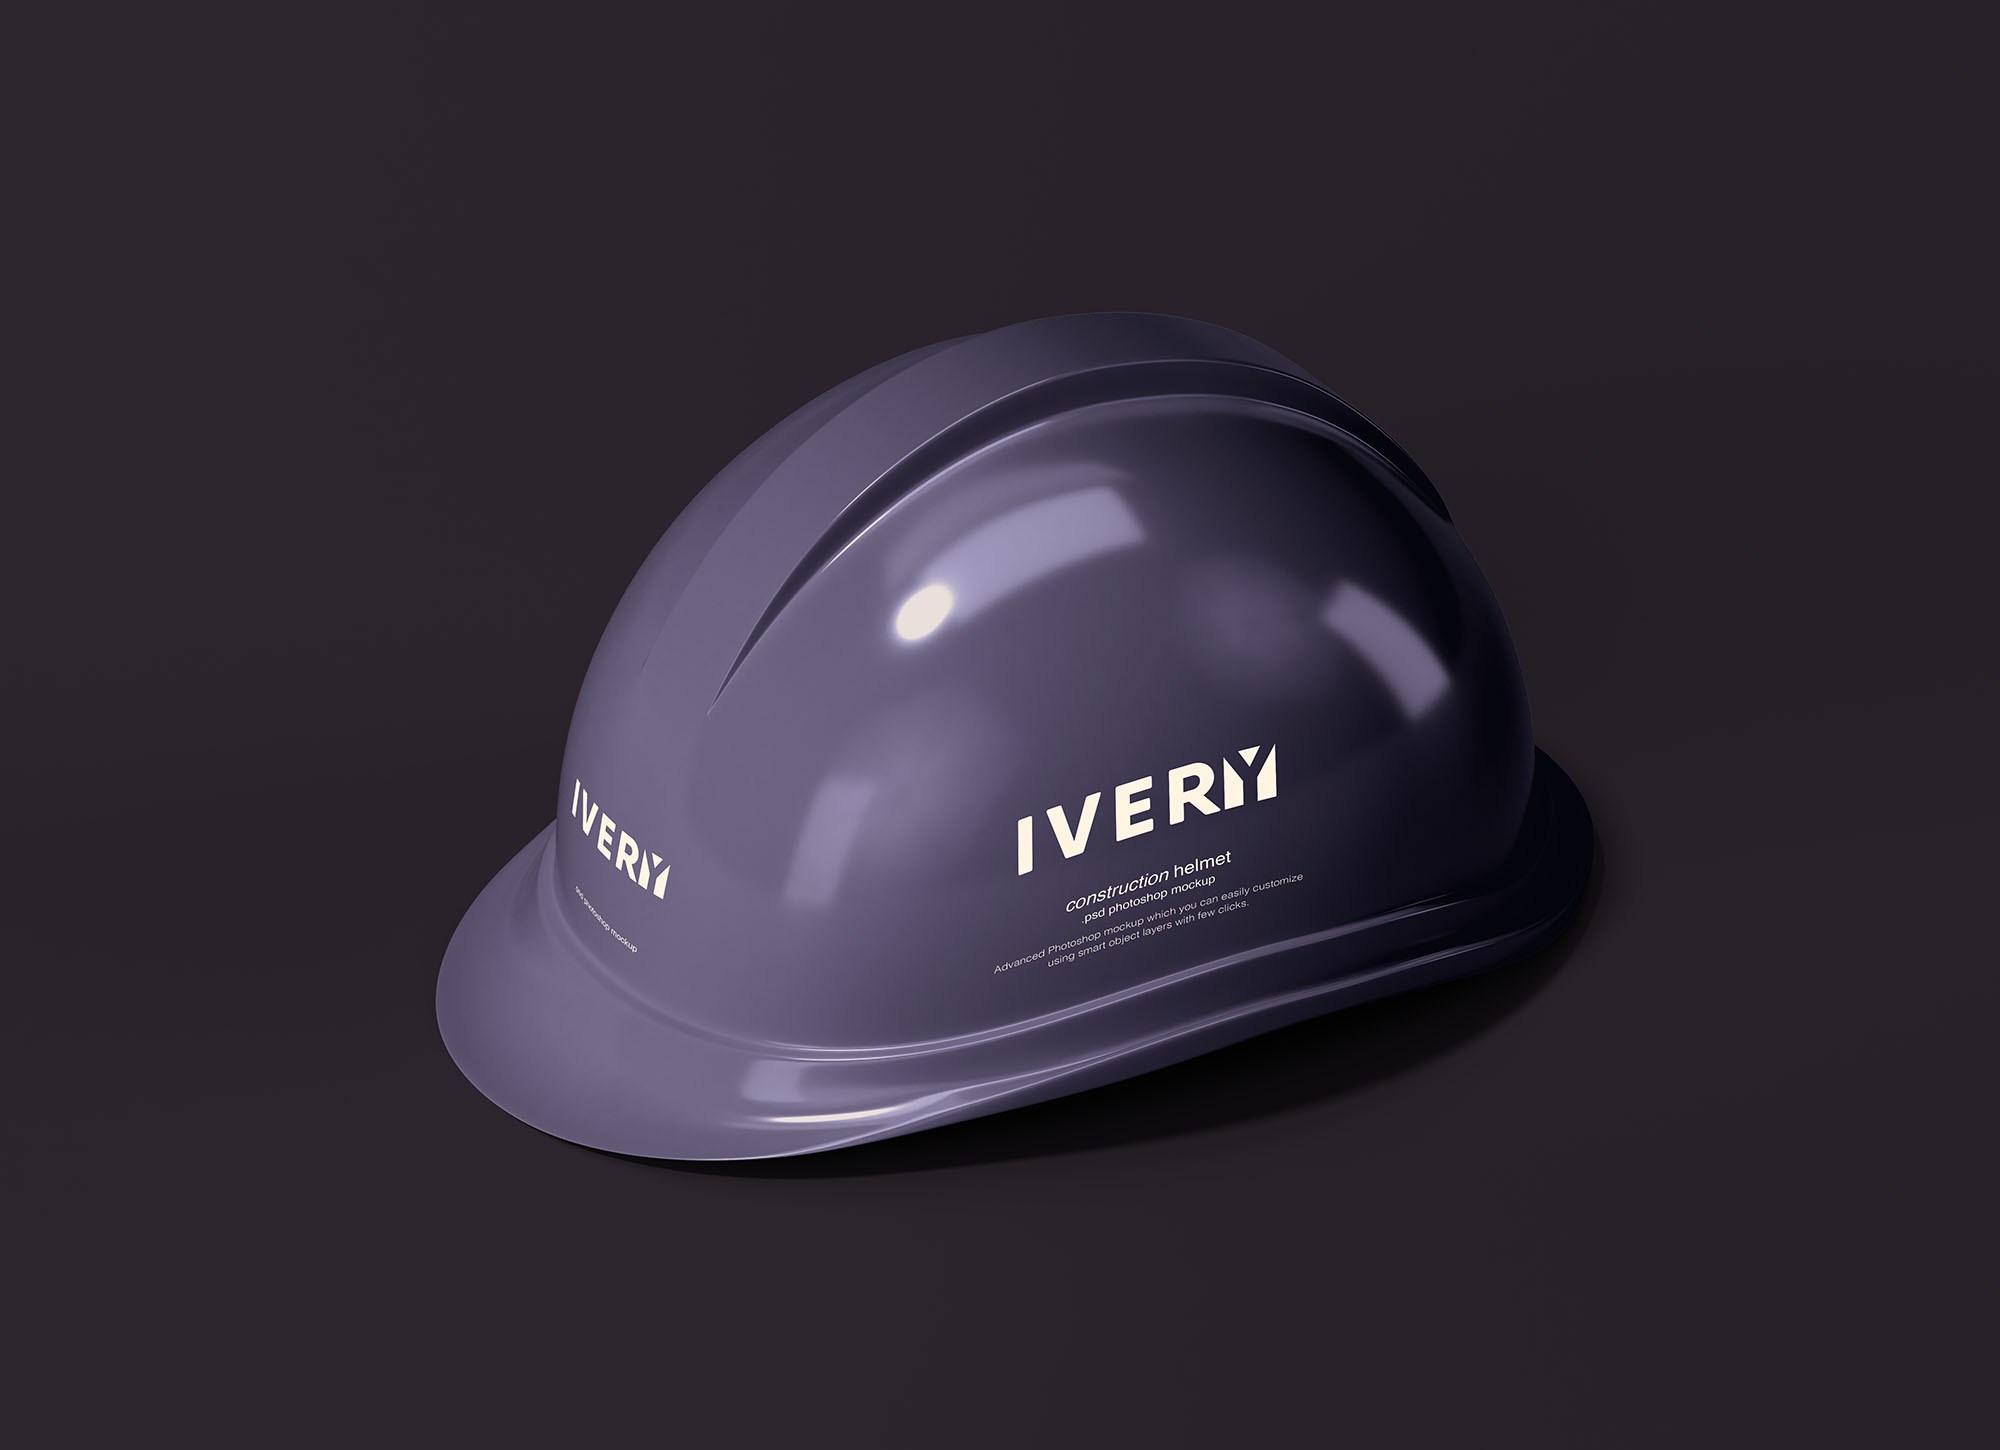 Free Construction Helmet Mockup PSD - Free Download